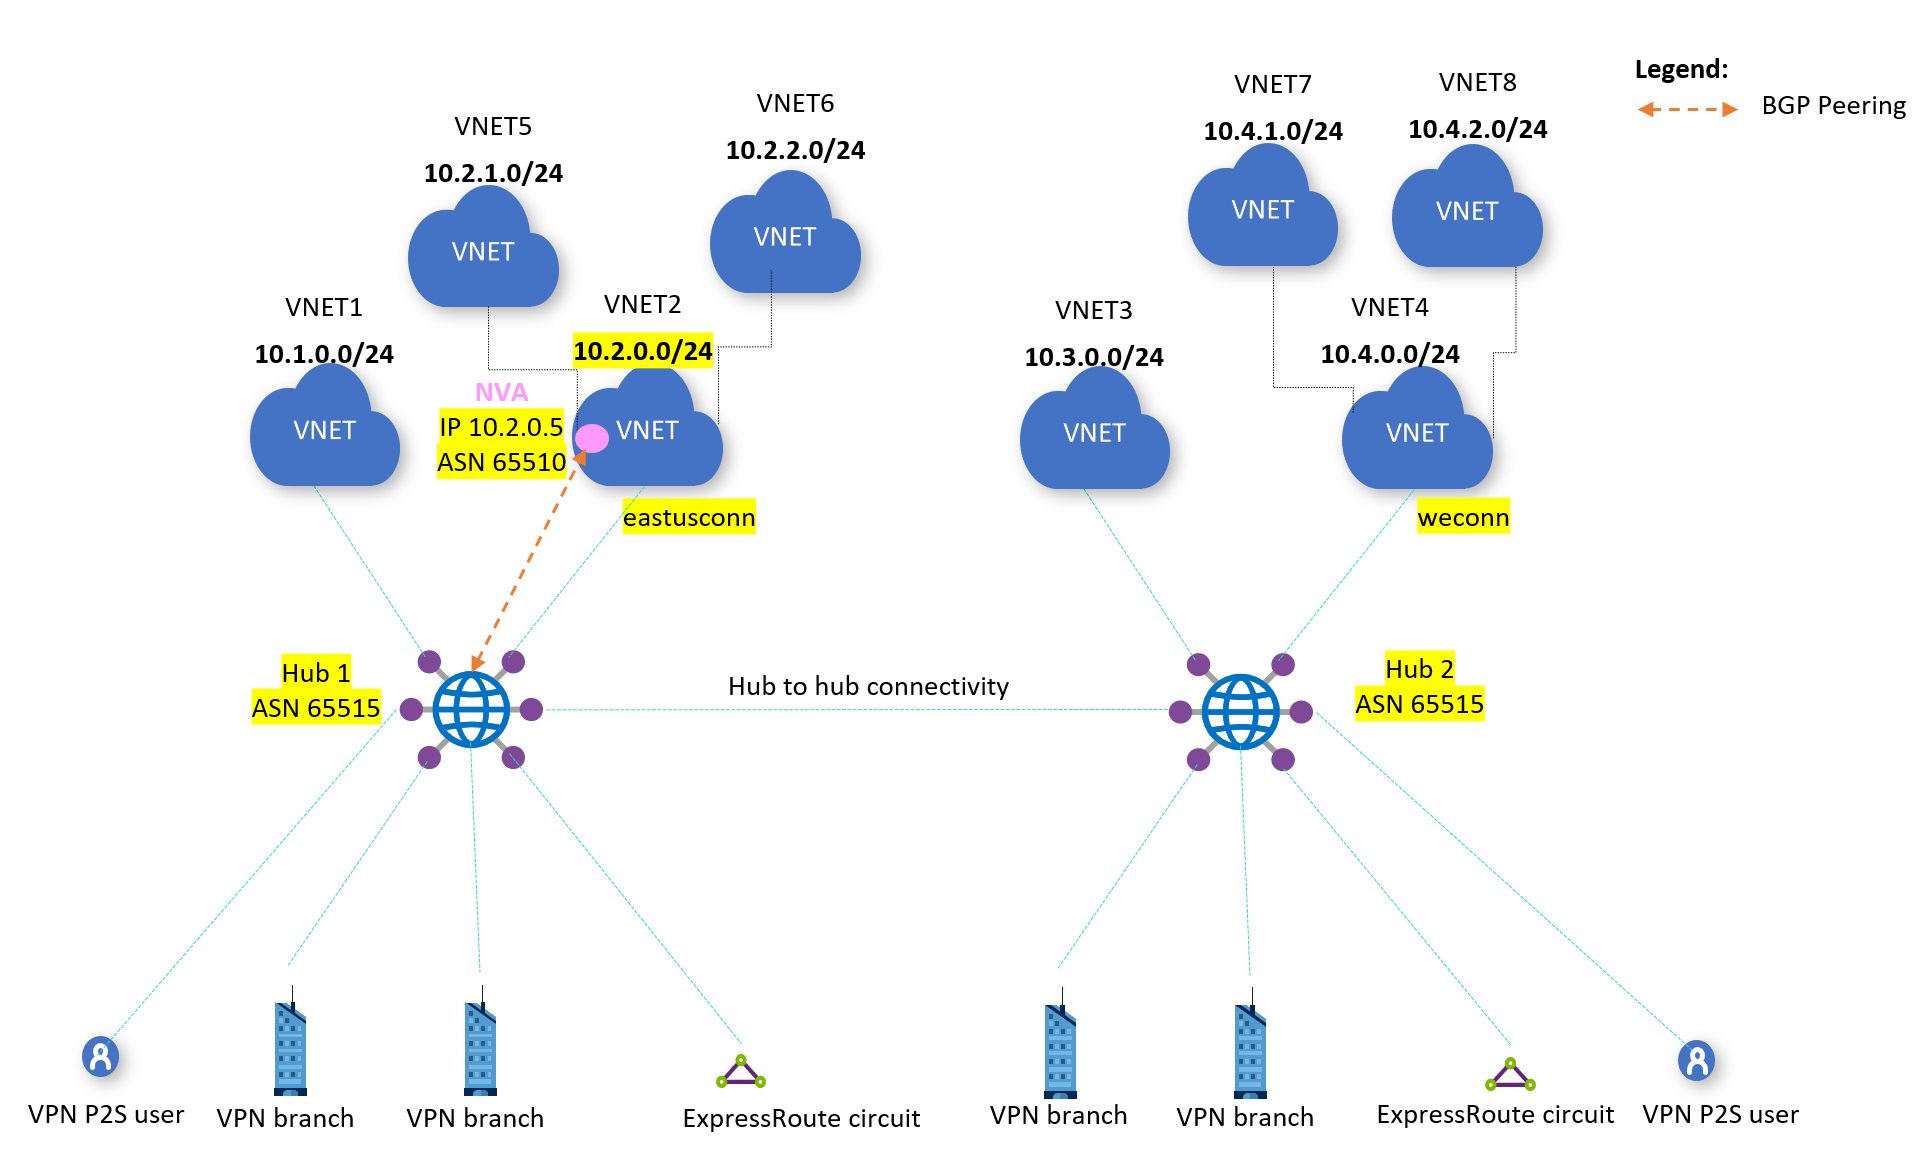 VNet-VNet 라우팅이 포함된 그래픽.